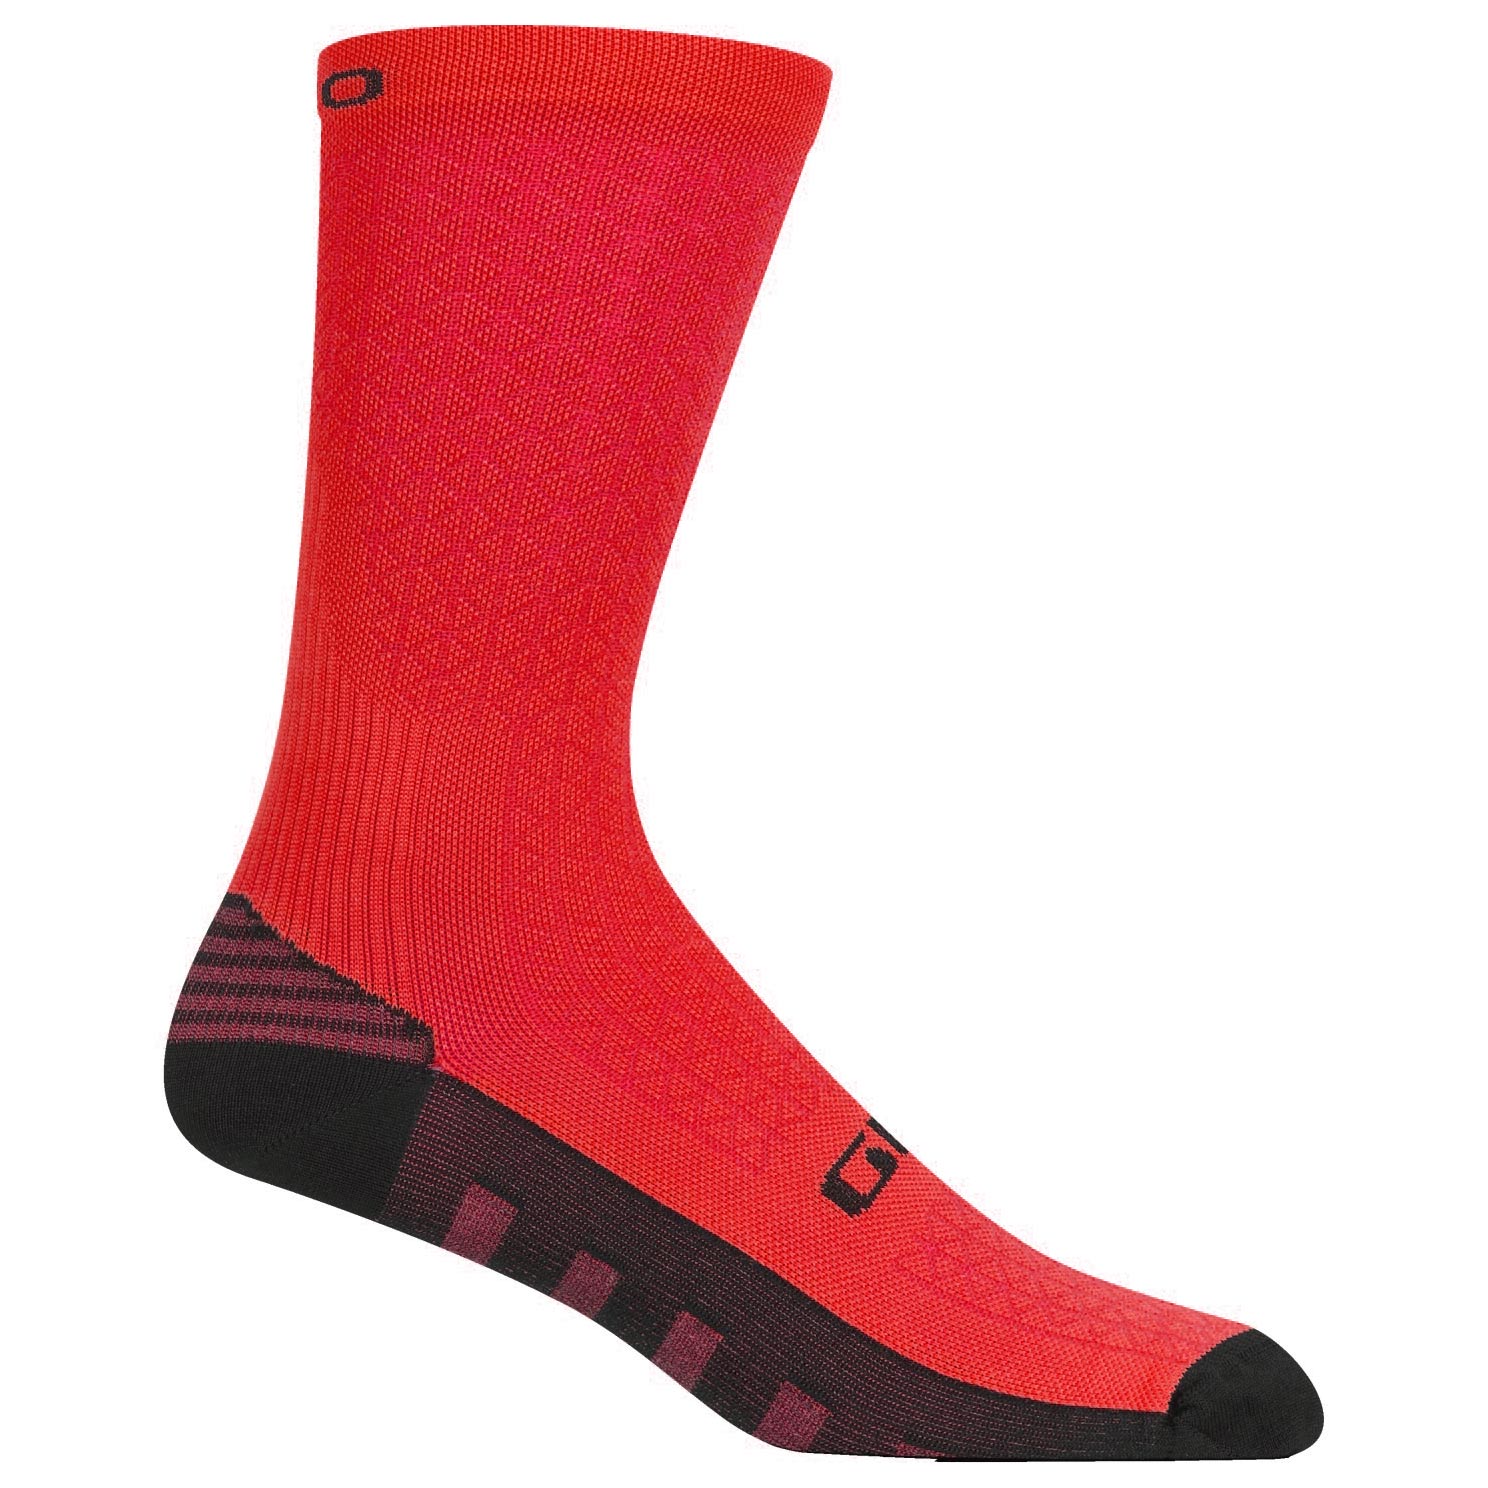 Productfoto van Giro HRC+ Grip Sokken - bright red